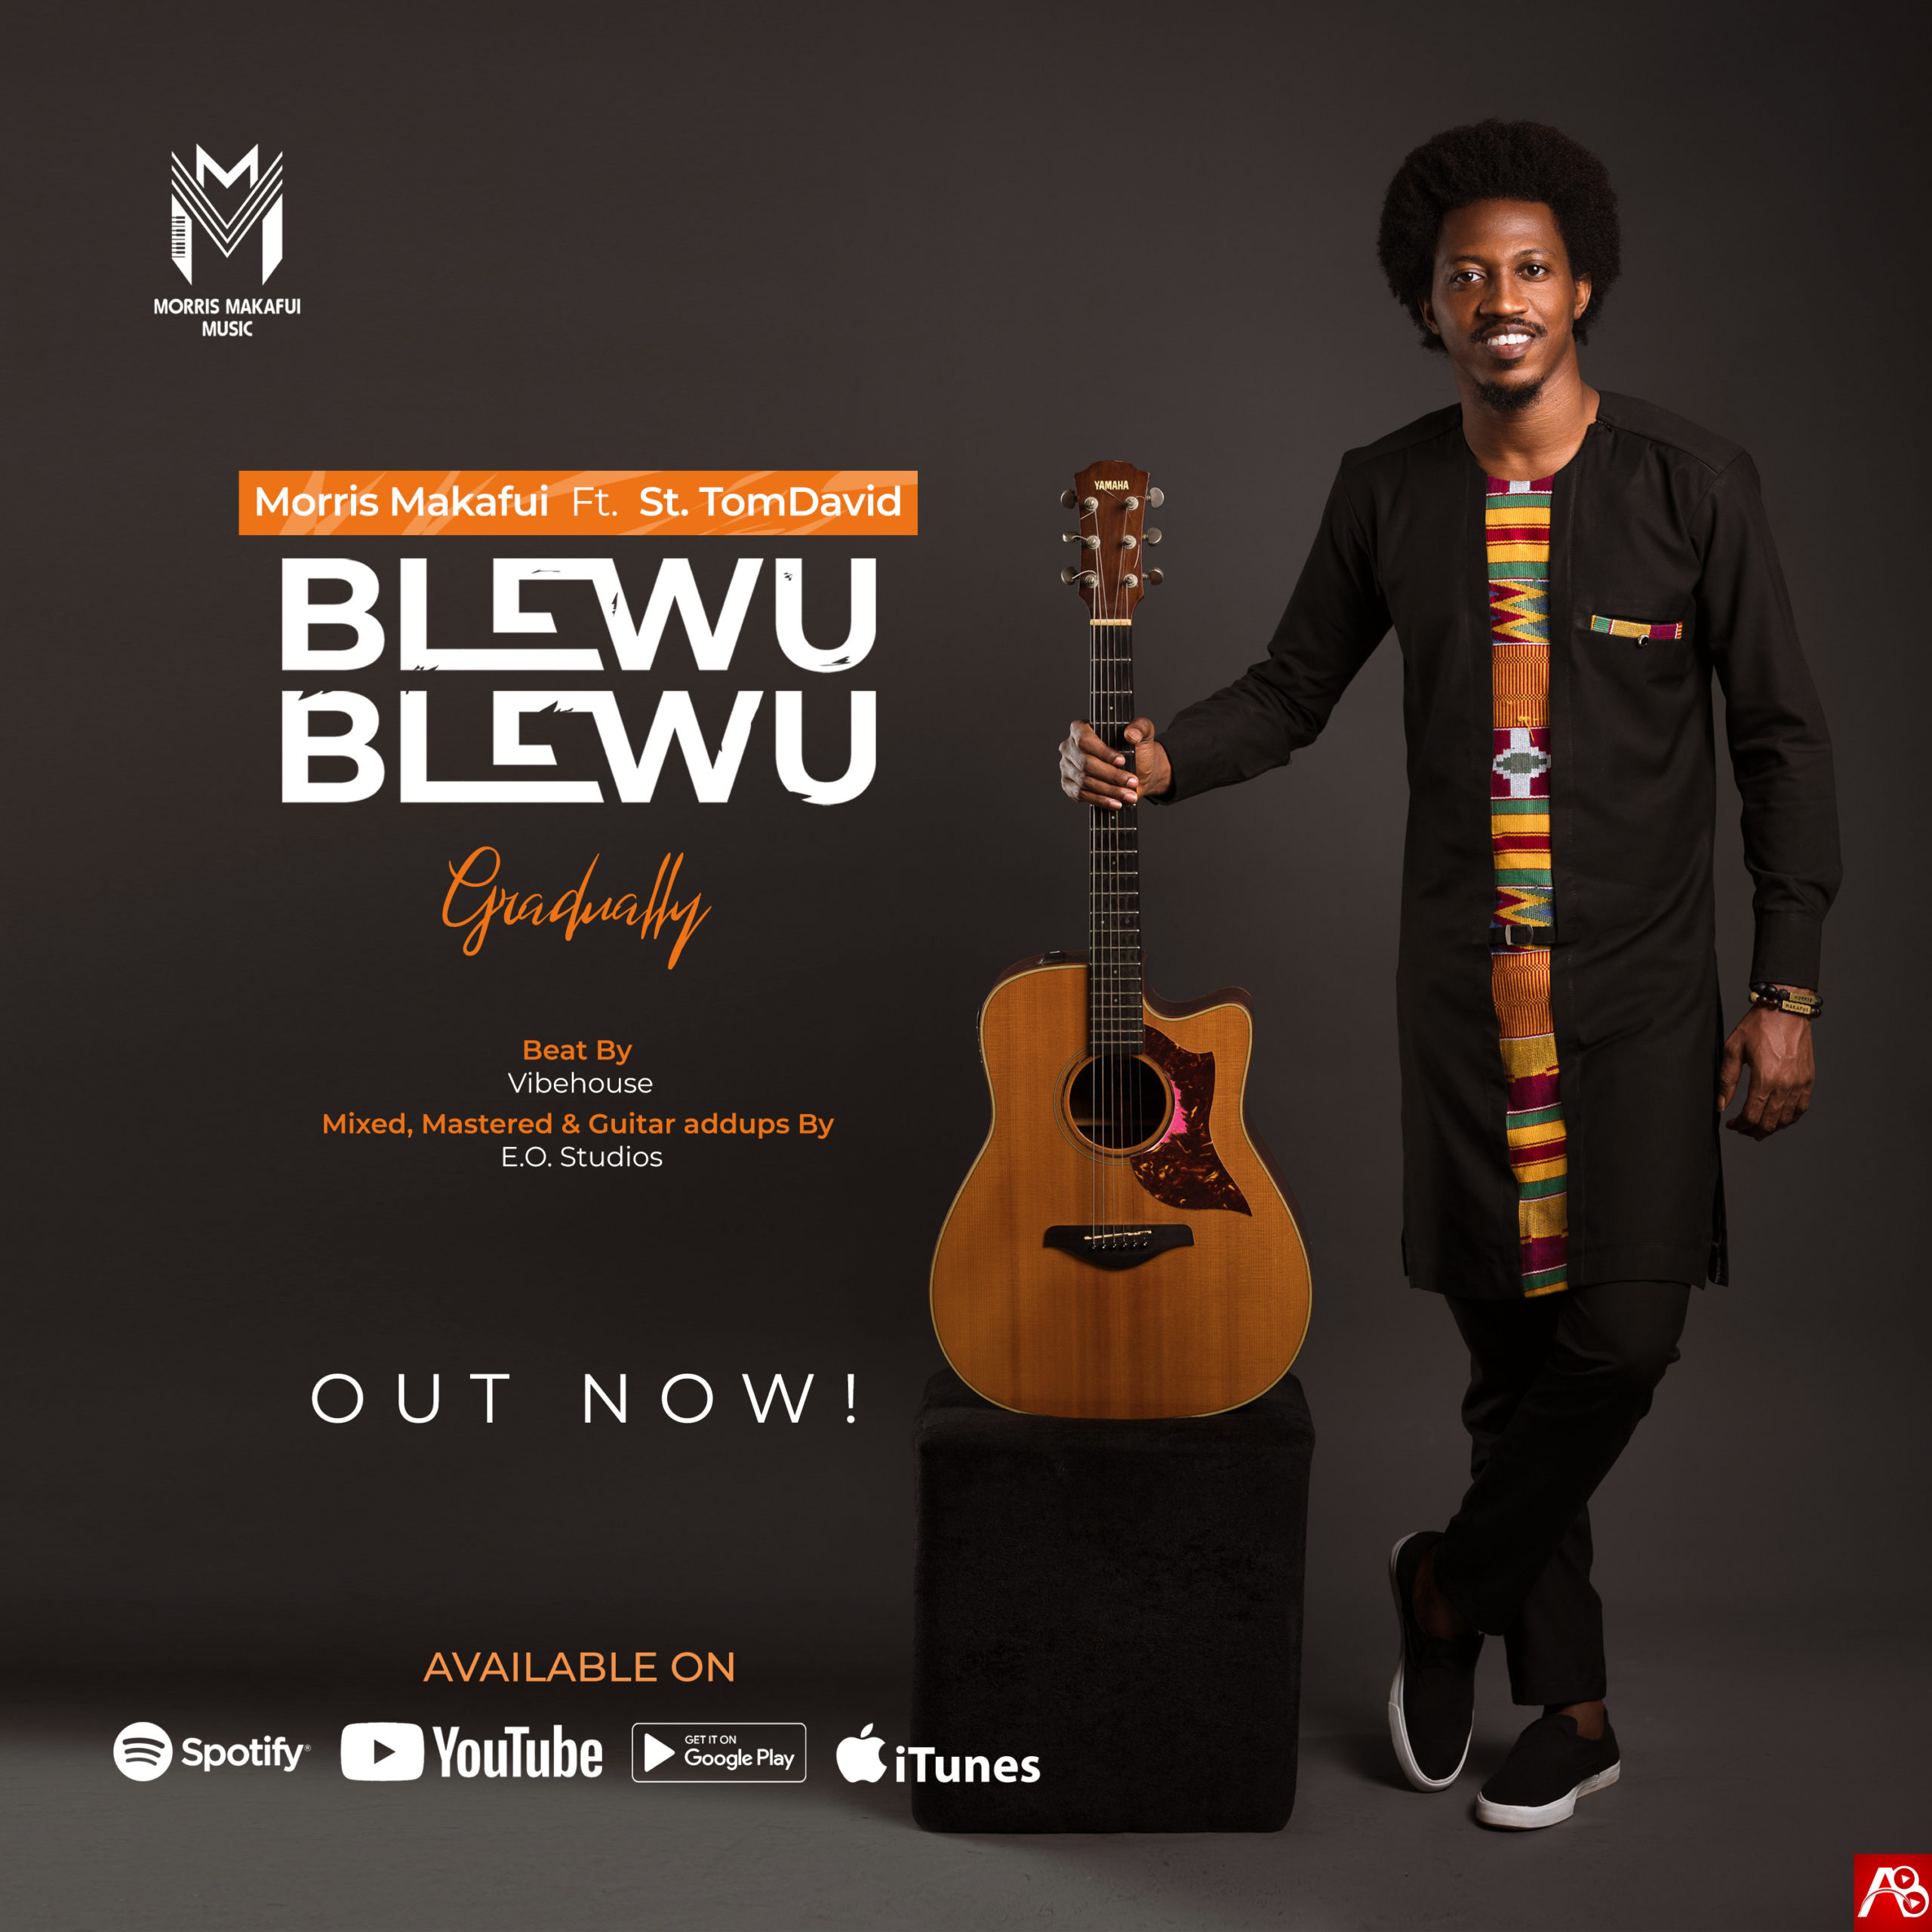 Morris Makafui - Blewu Blewu 'Gradually St. TomDavid